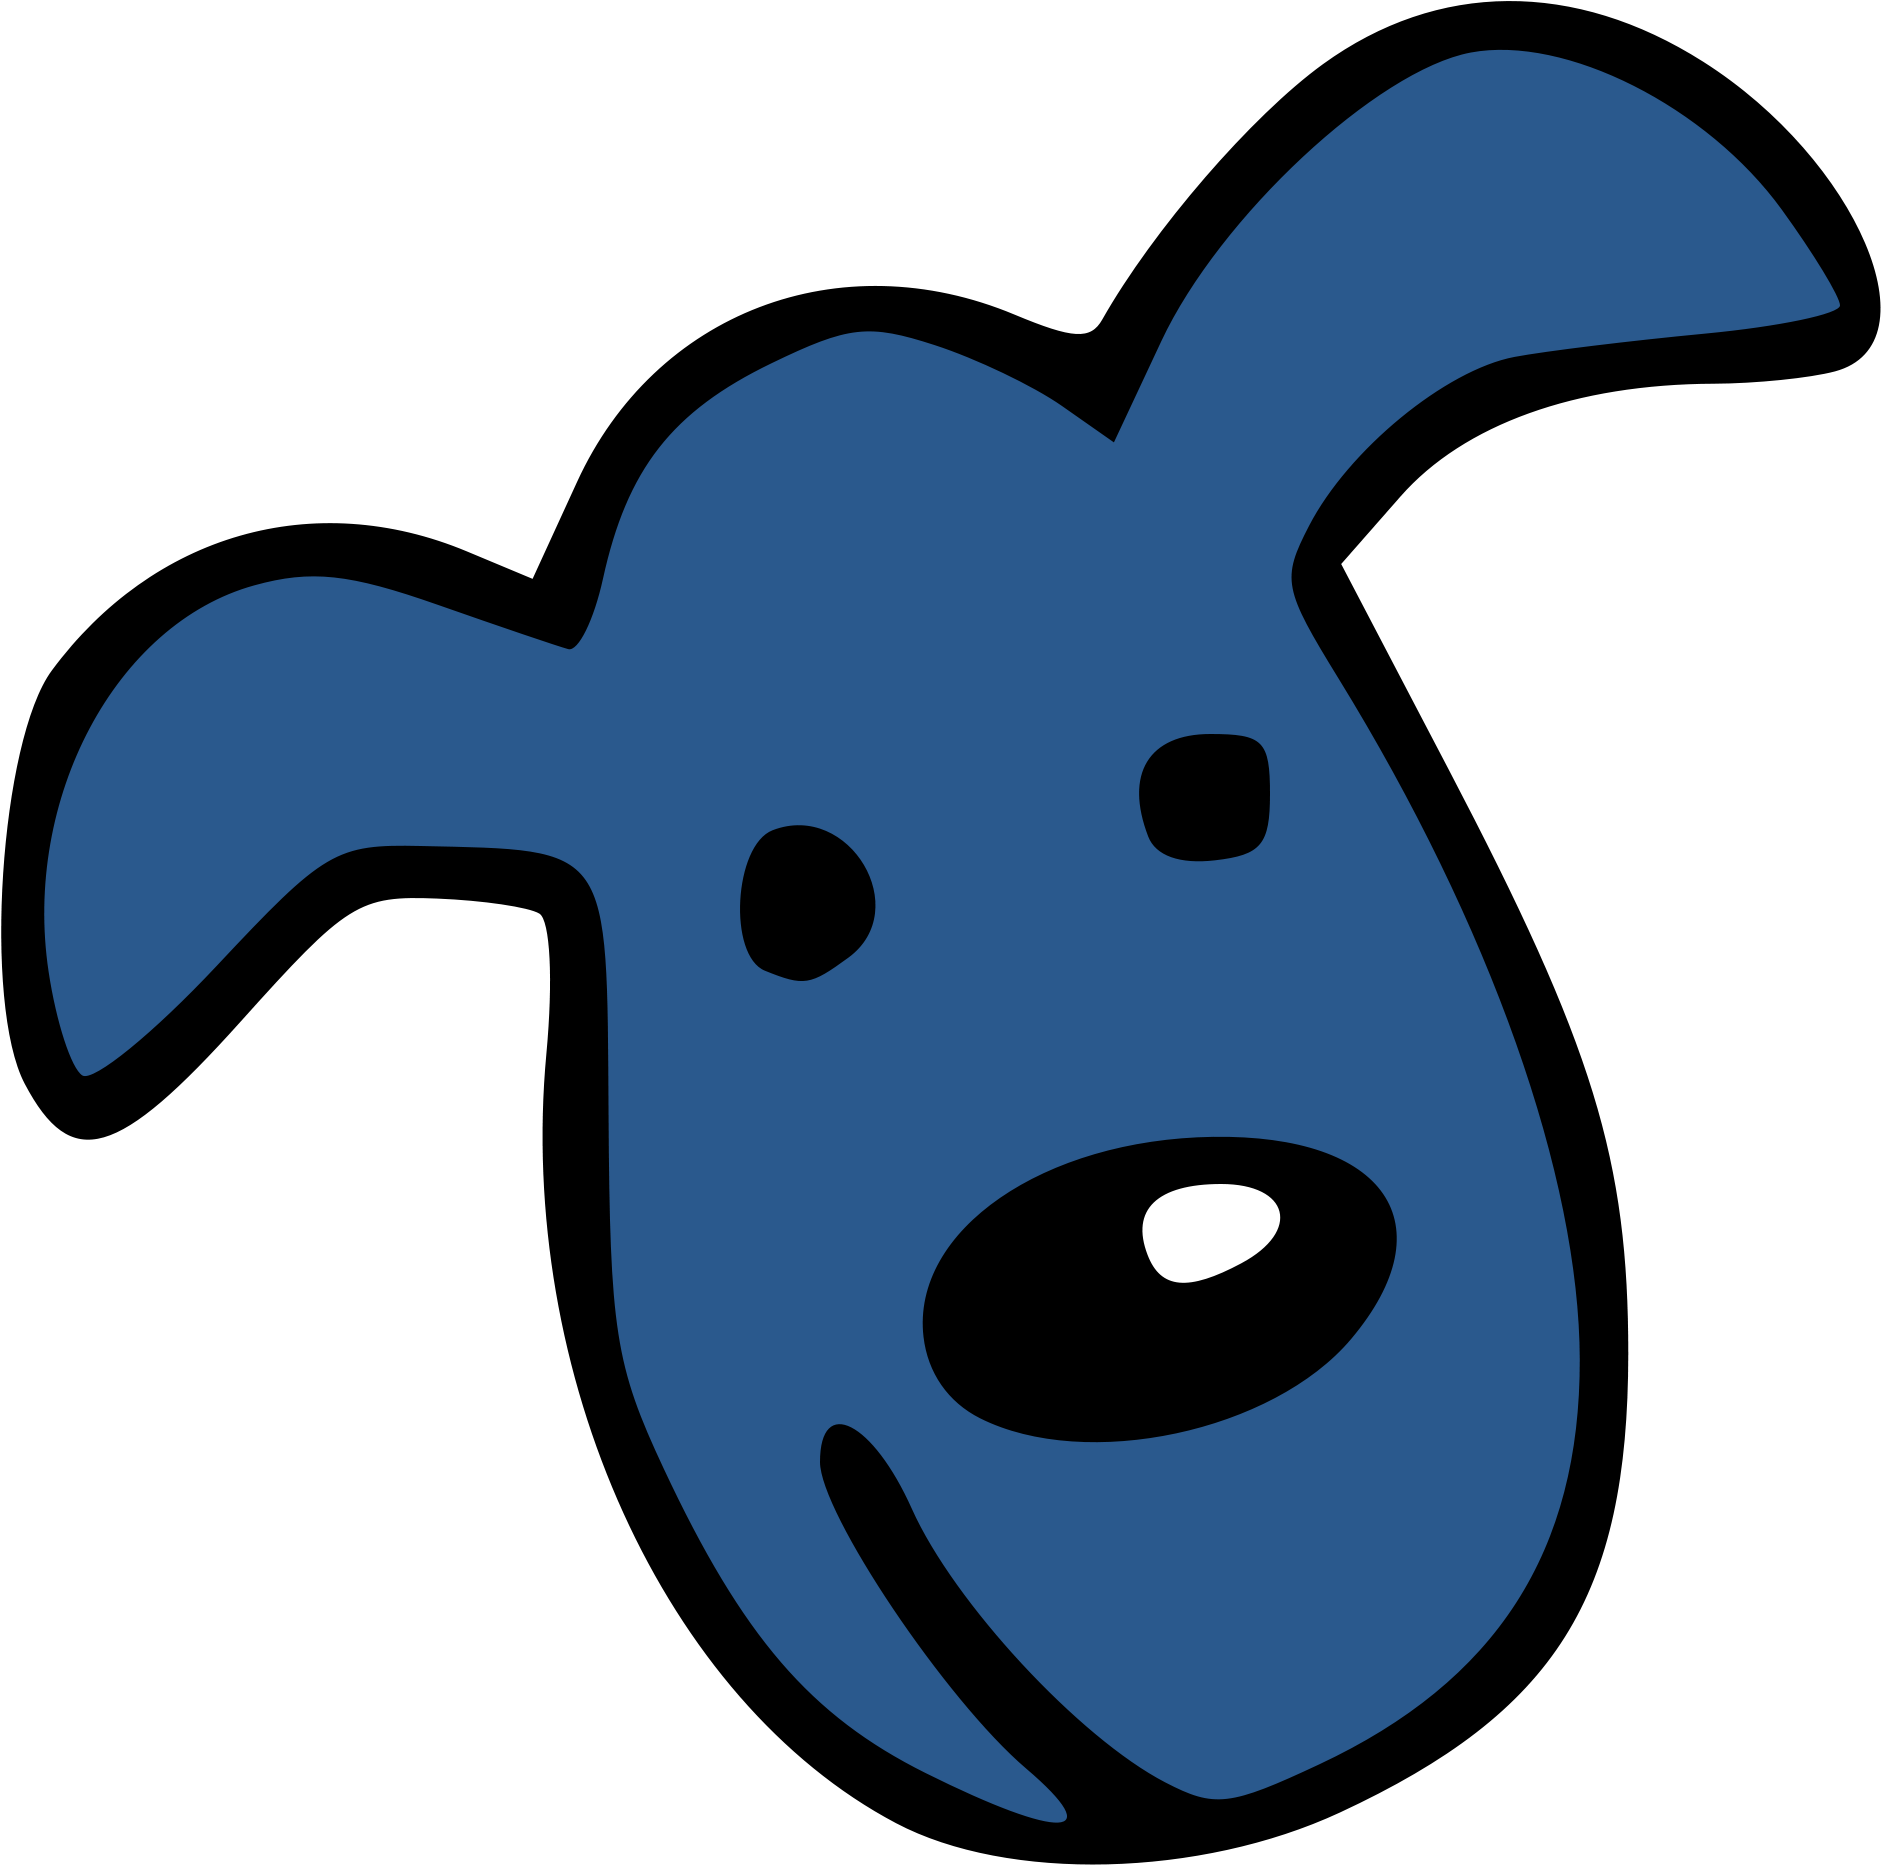 Open - Creative Commons Dog Icon (2000x2000)